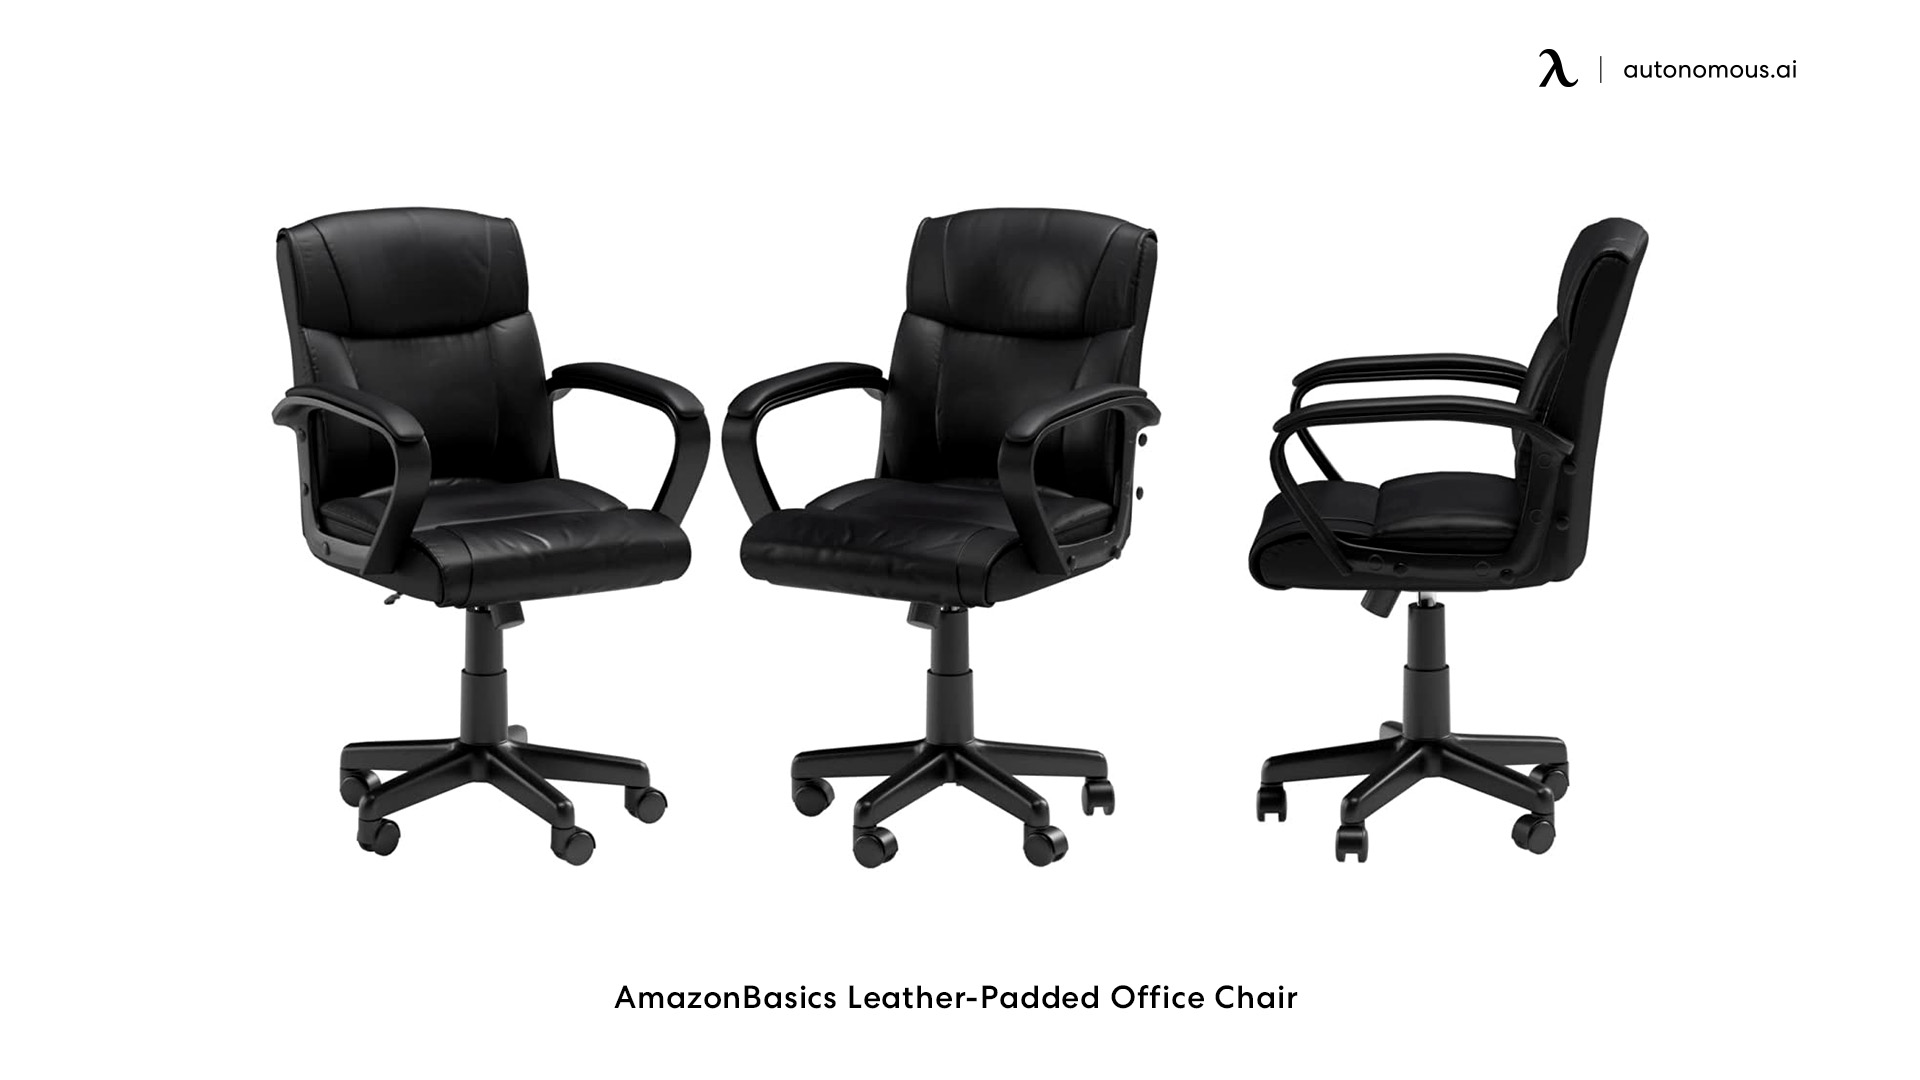 AmazonBasics office chair for 300 lbs